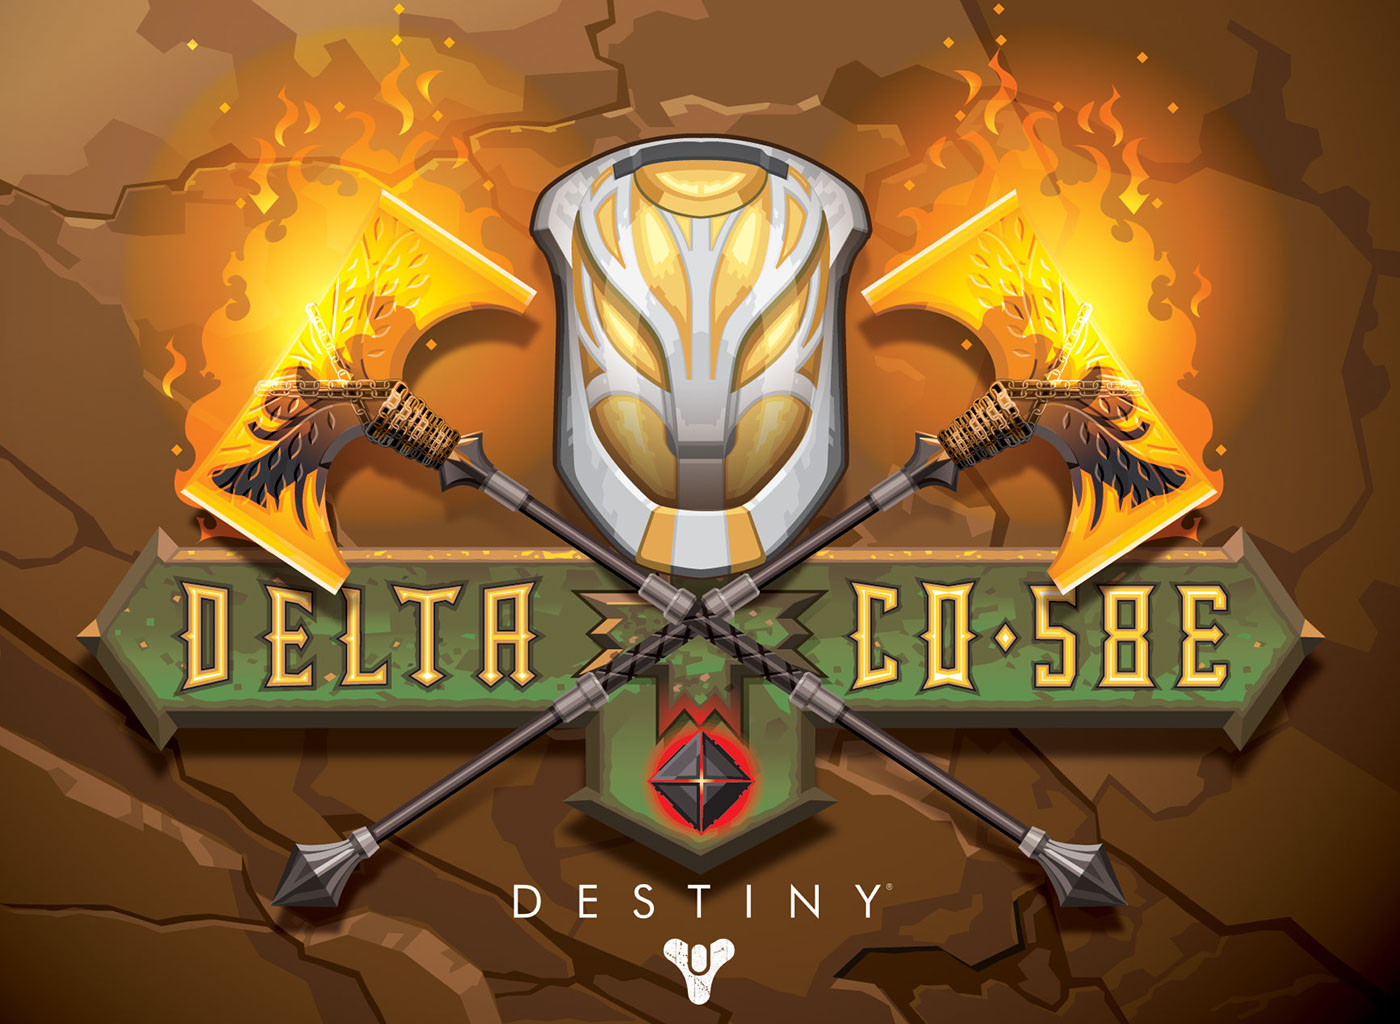 destiny video game Rise of Iron Illustrator 1st person shooter Bungie BATTLE AXE Helmet Siva